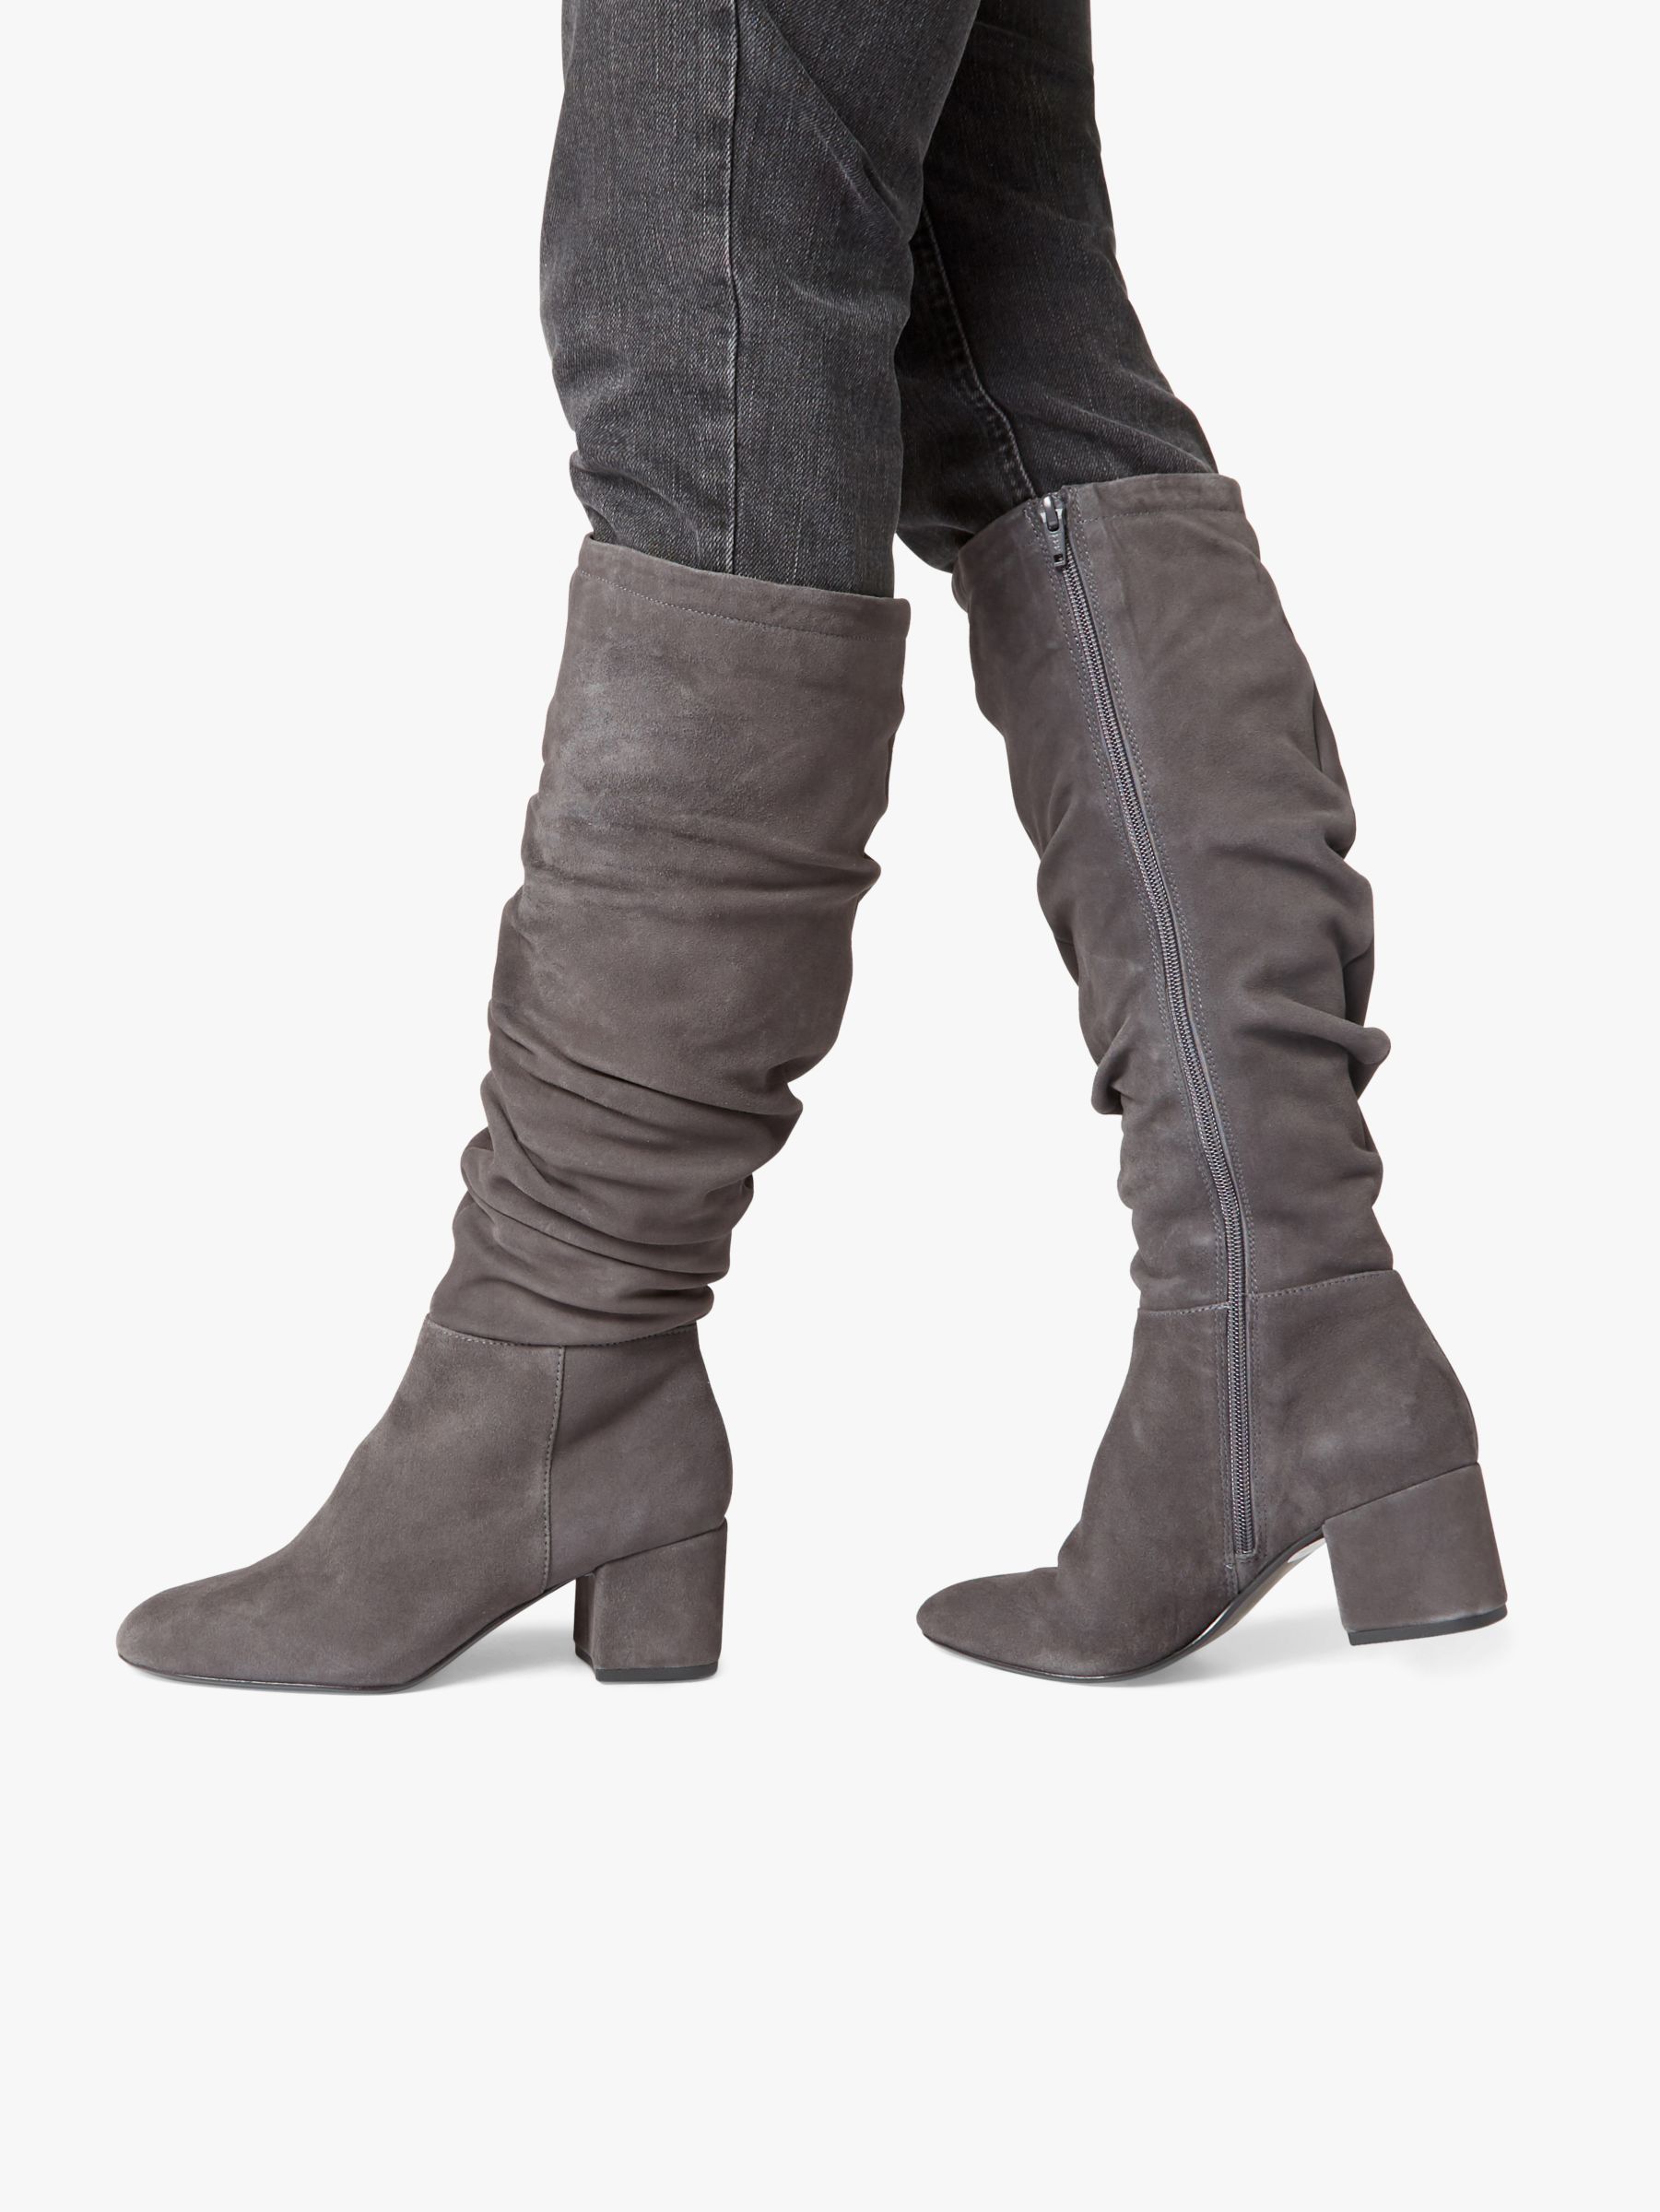 grey knee high boots